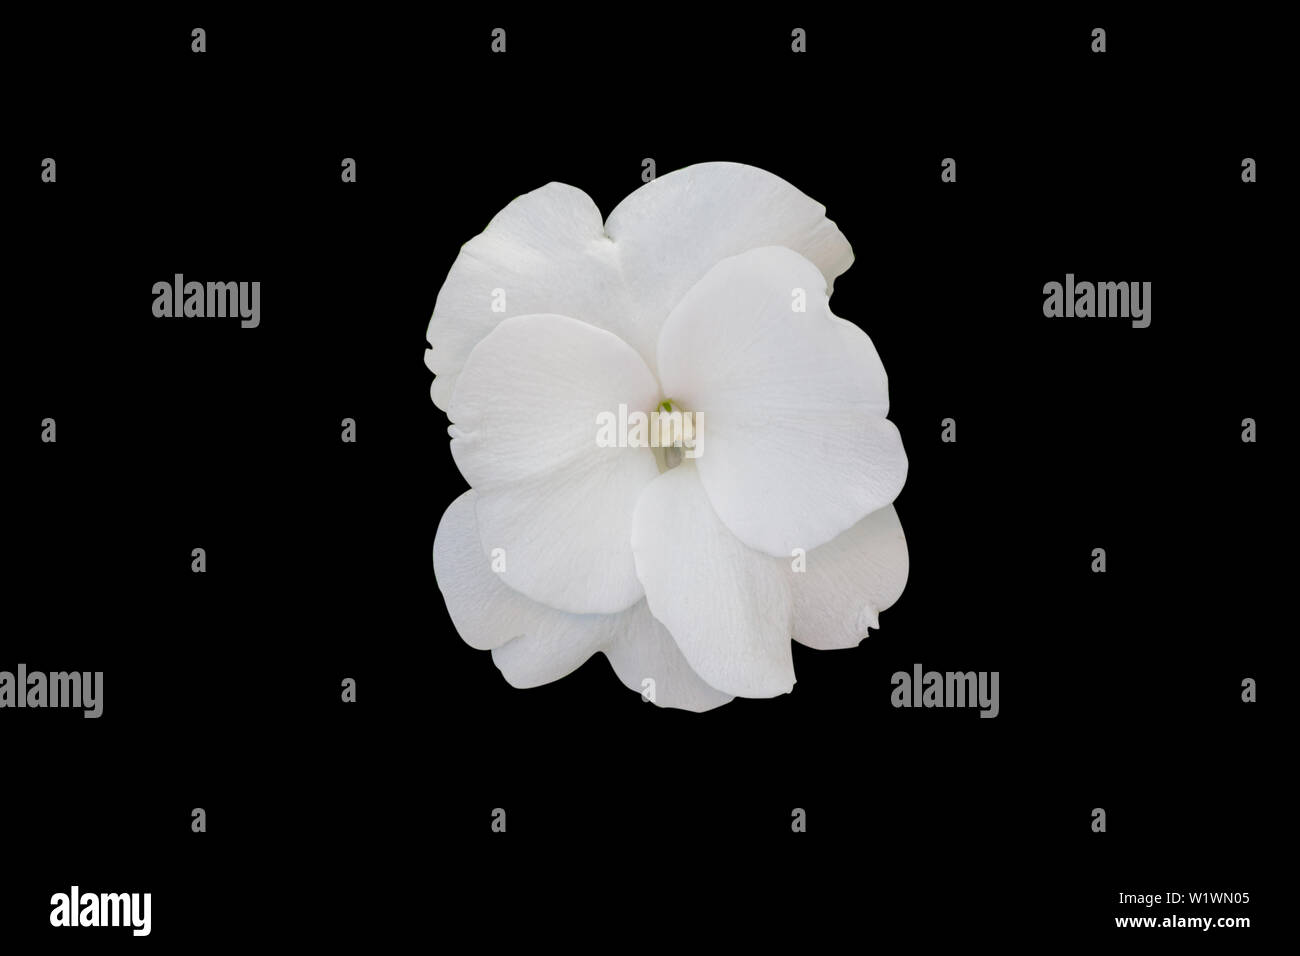 Impatiens walleriana white flower on black background. Stock Photo